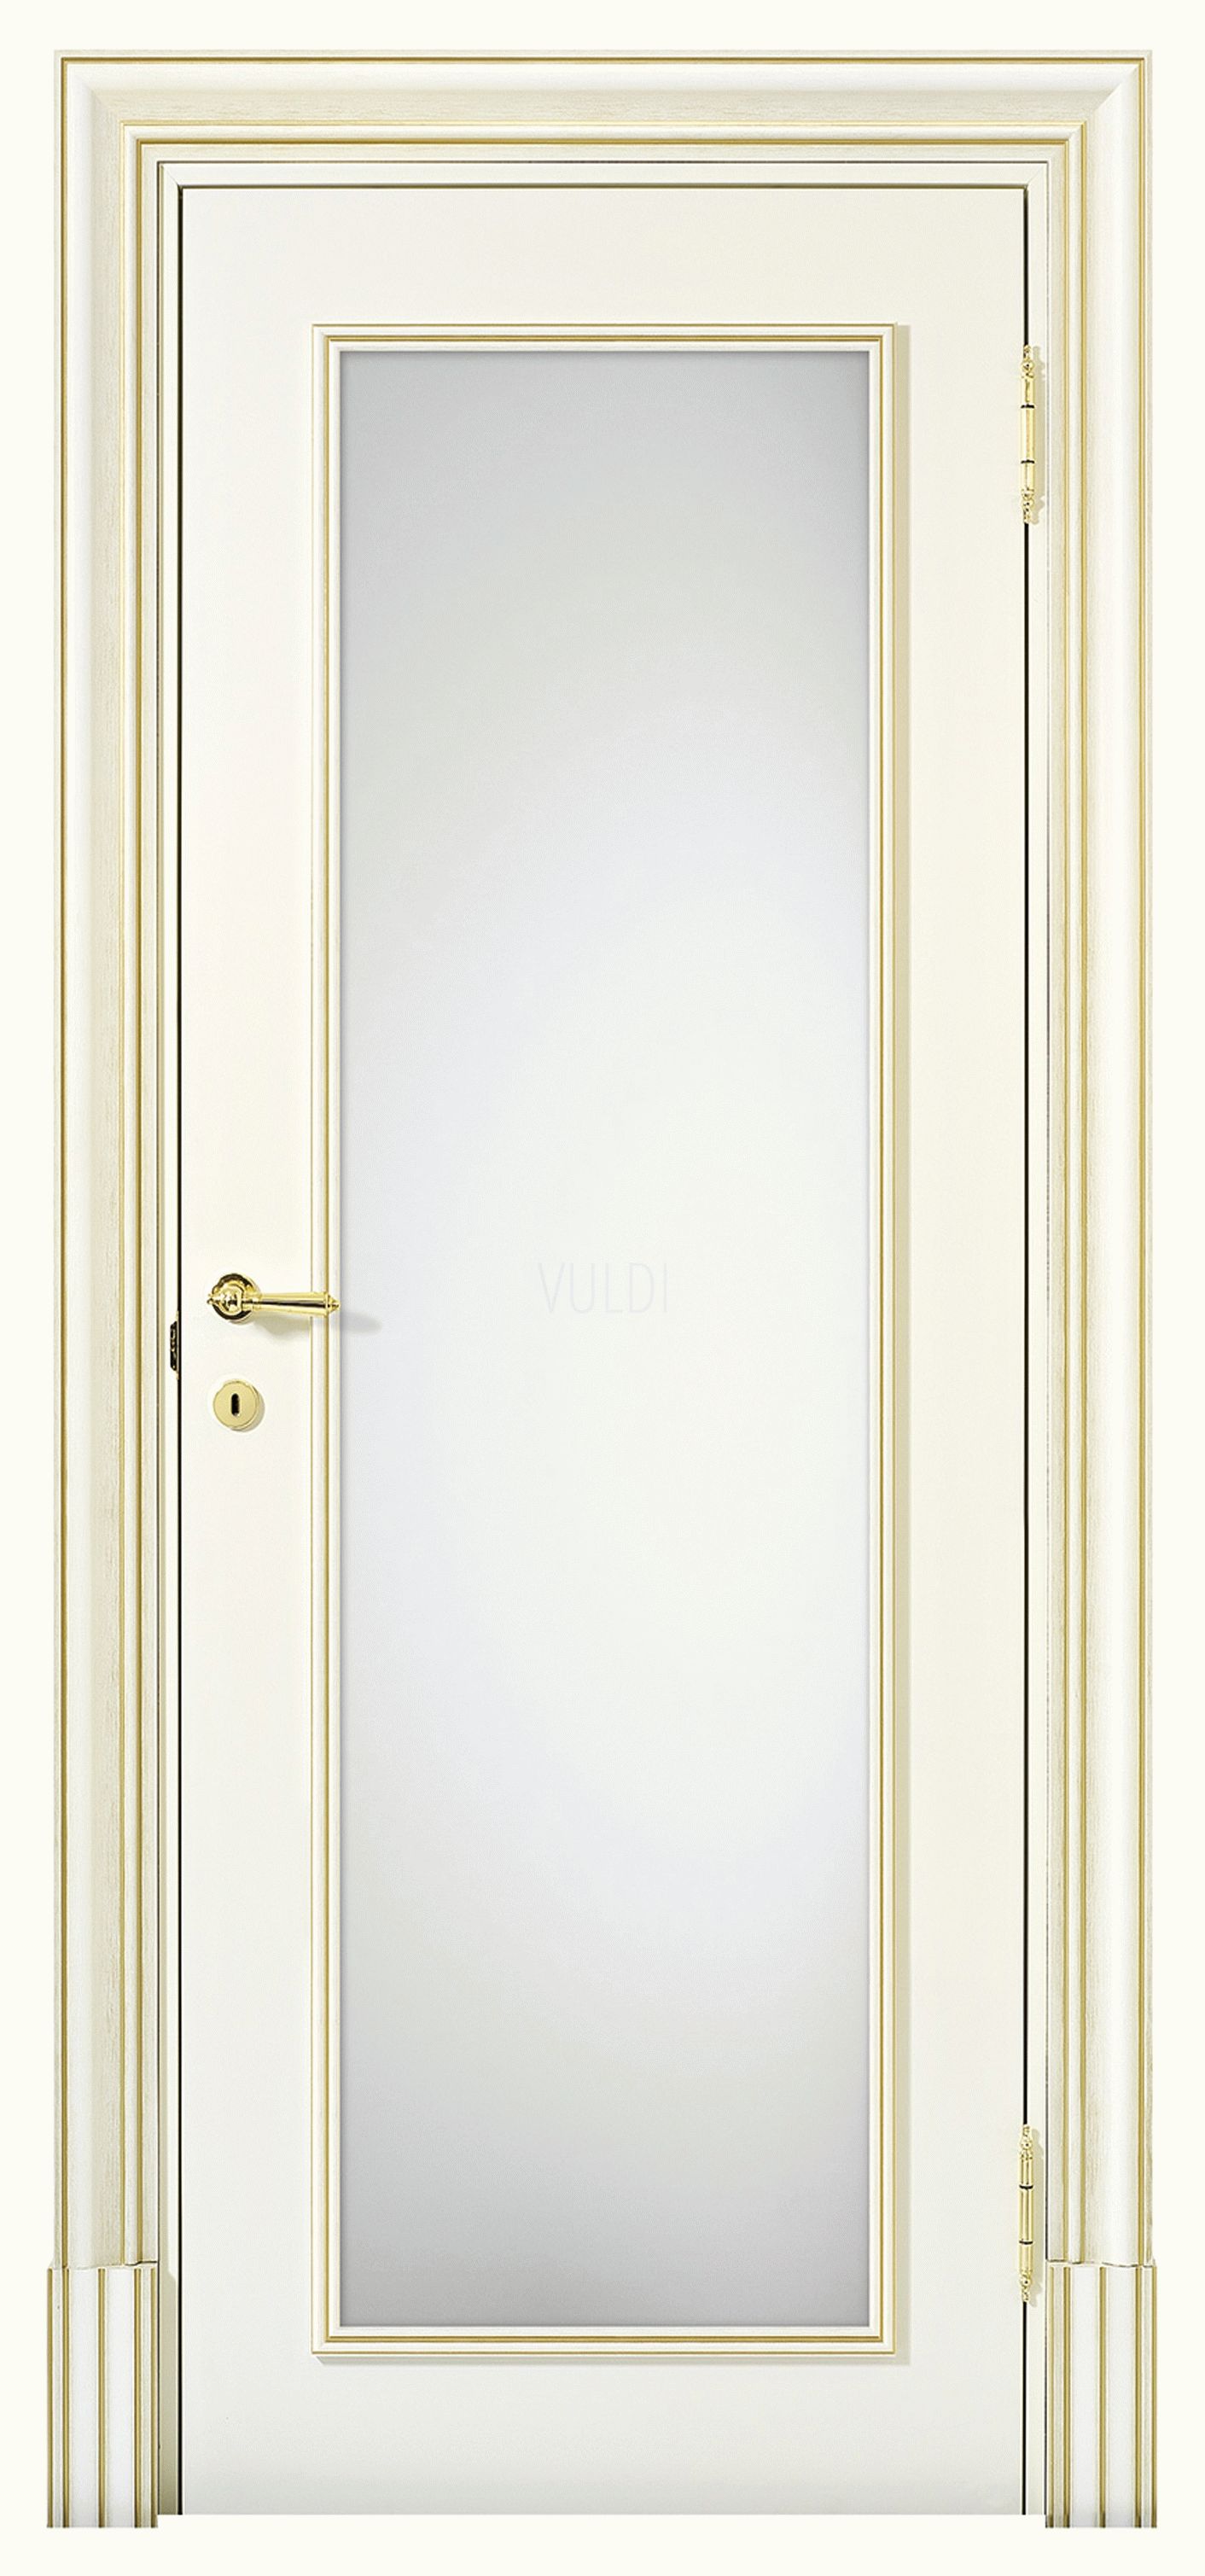  Potenza classico 130 PP Interior Door image from VULDI COMPANY